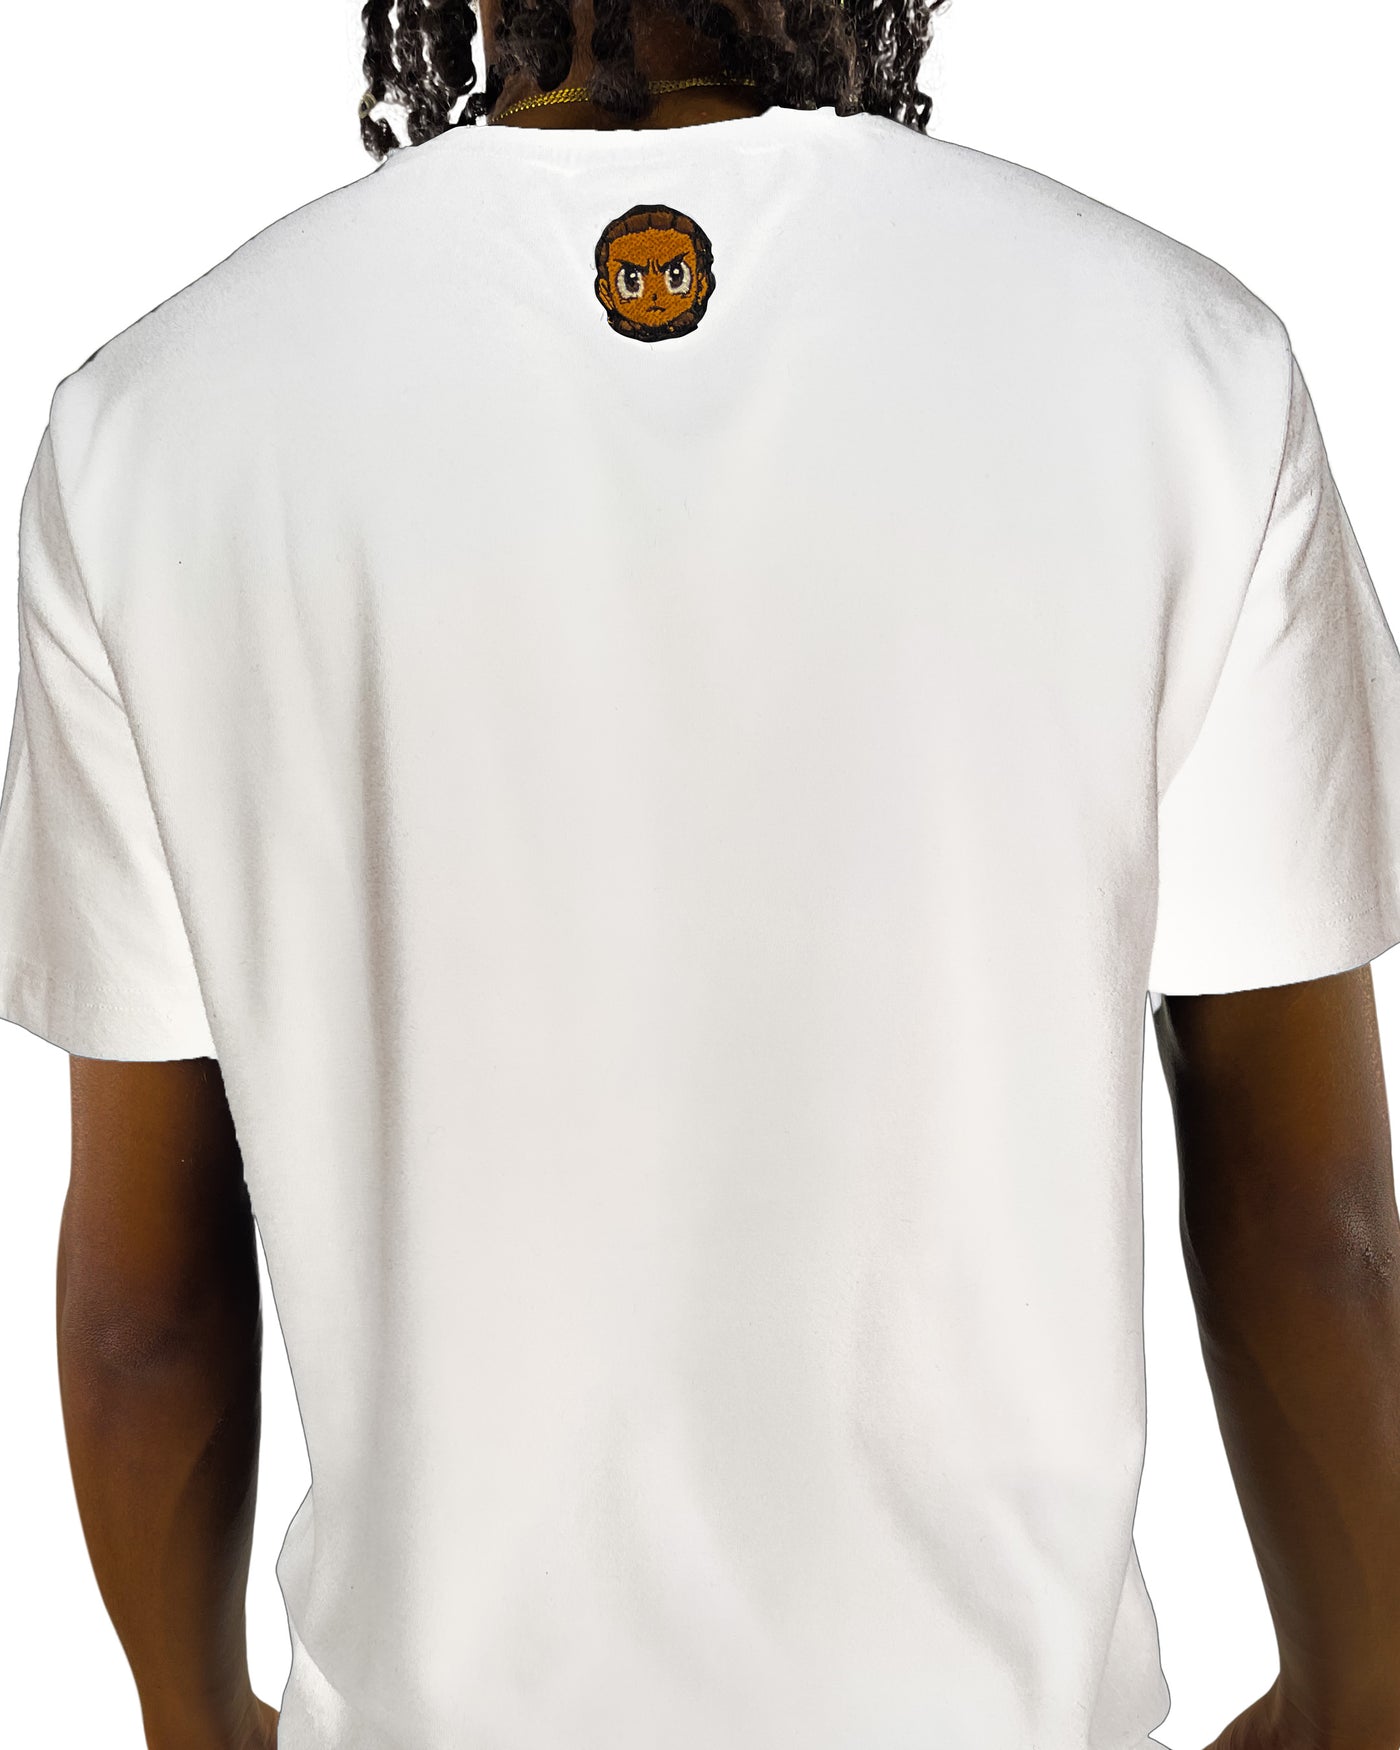 deKryptic x The Boondocks - The Boondocks Salute White T-Shirt